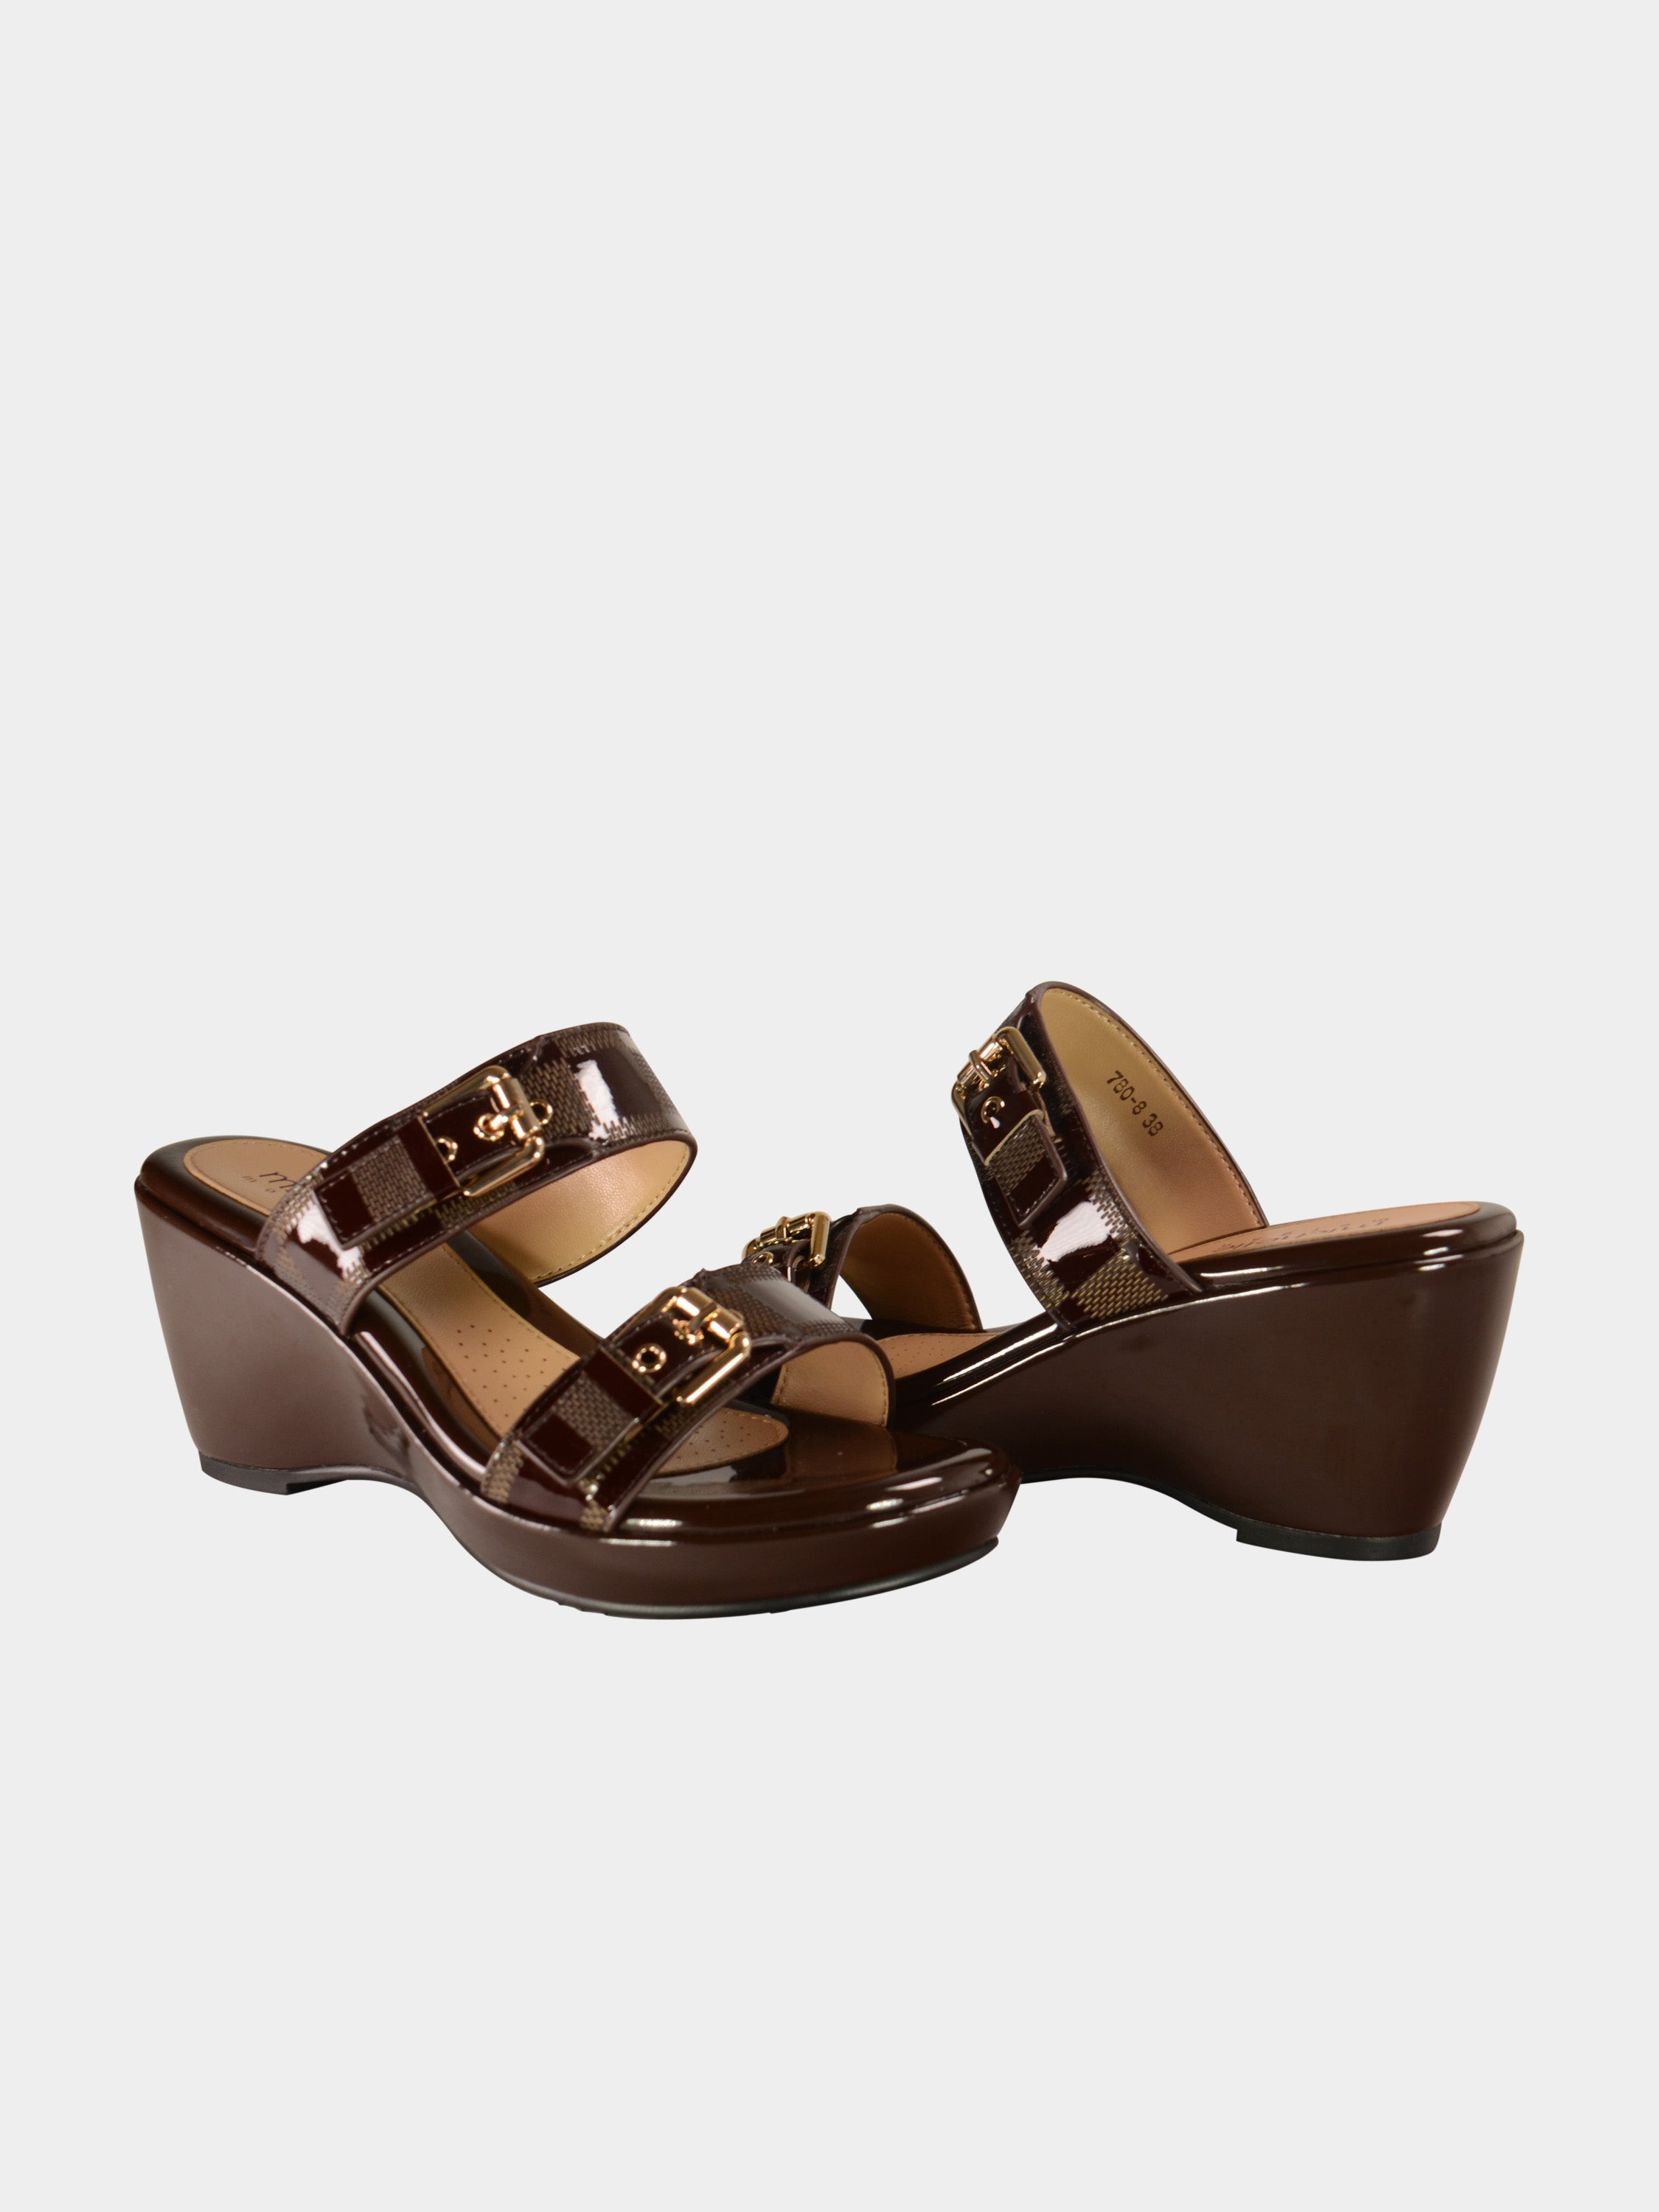 Michelle Morgan 780-8 Women's Wedge Sandals #color_Brown